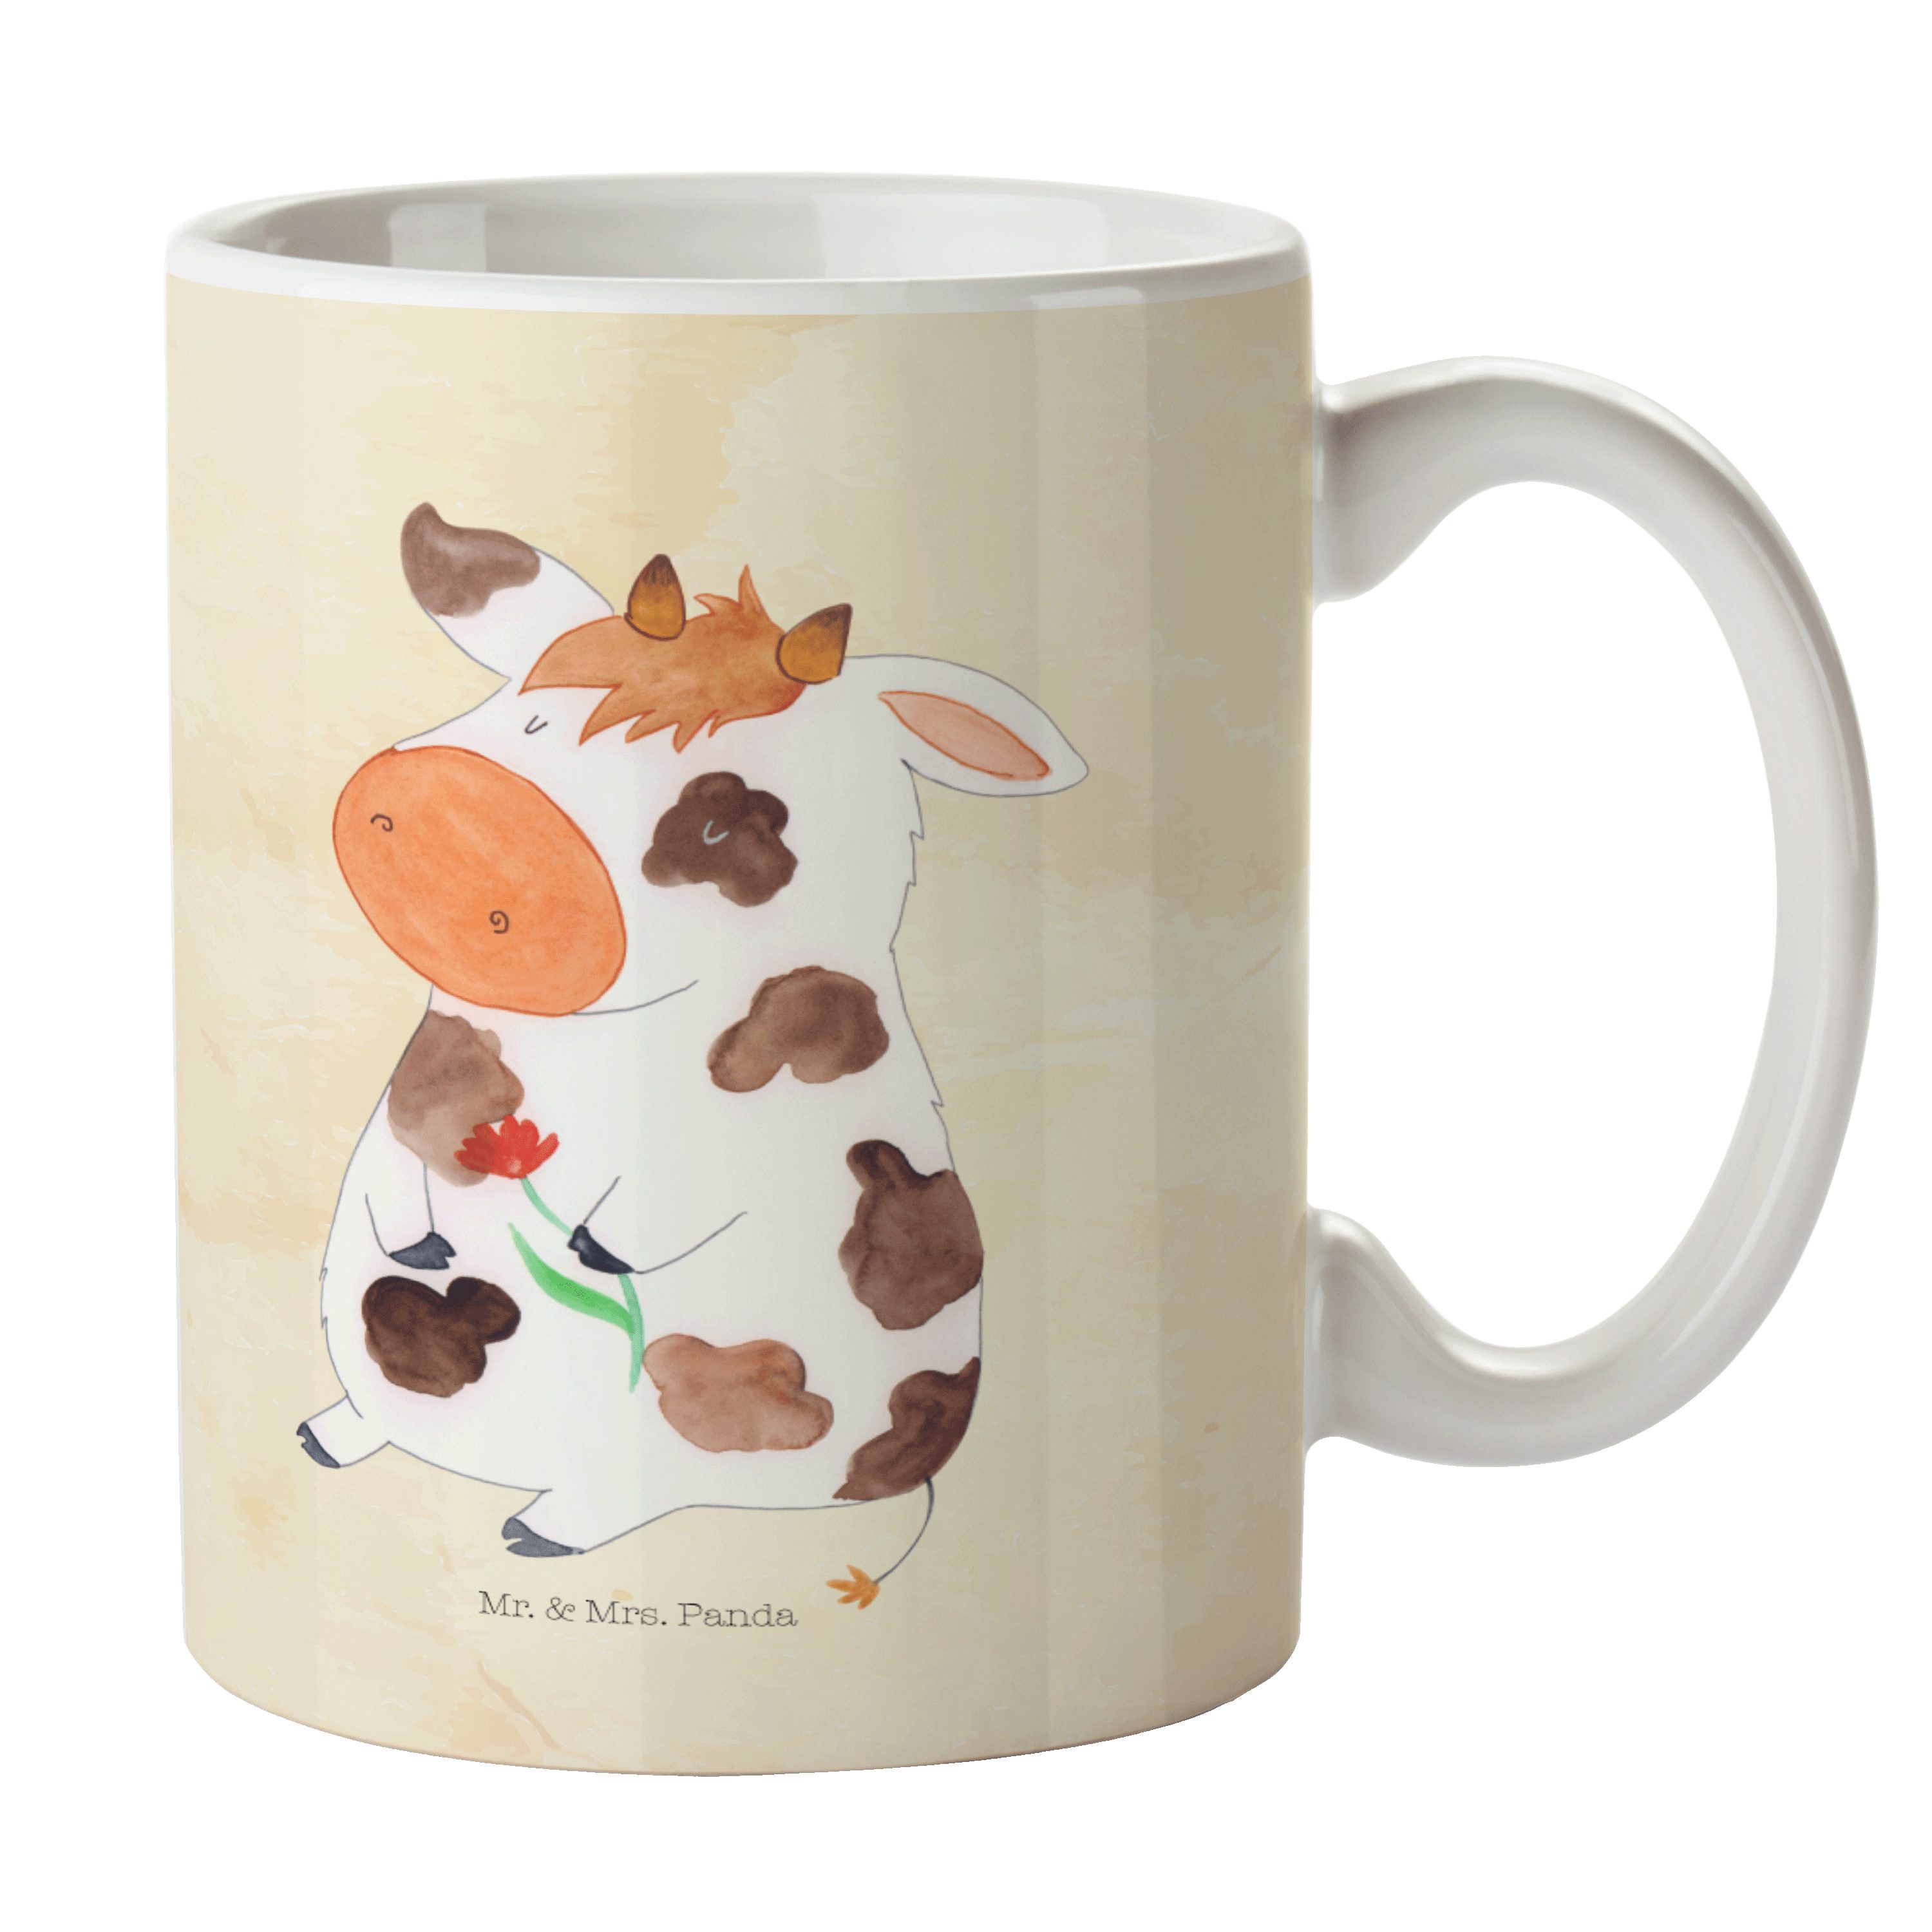 Mr. & Mrs. Panda Tasse Kuh - Vintage - Geschenk, Tasse, Landwirt, Kaffeebecher, Landwirtin, Keramik | Tassen